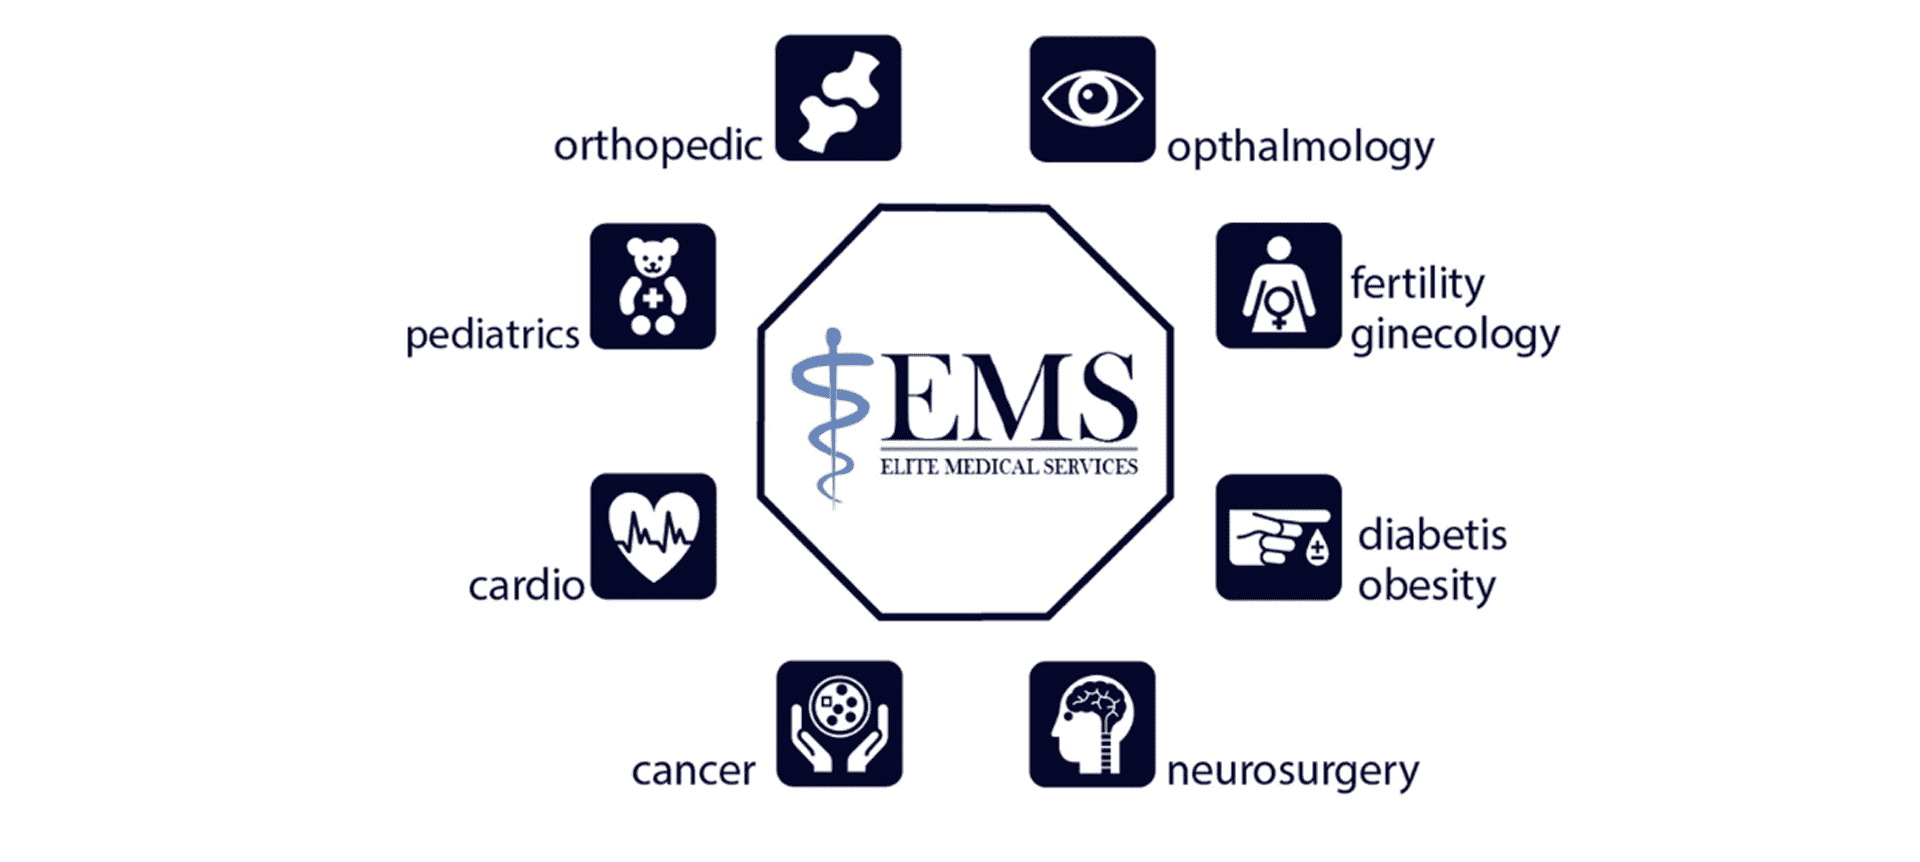 elite medical services portfolio clienti digital compass medical tourism